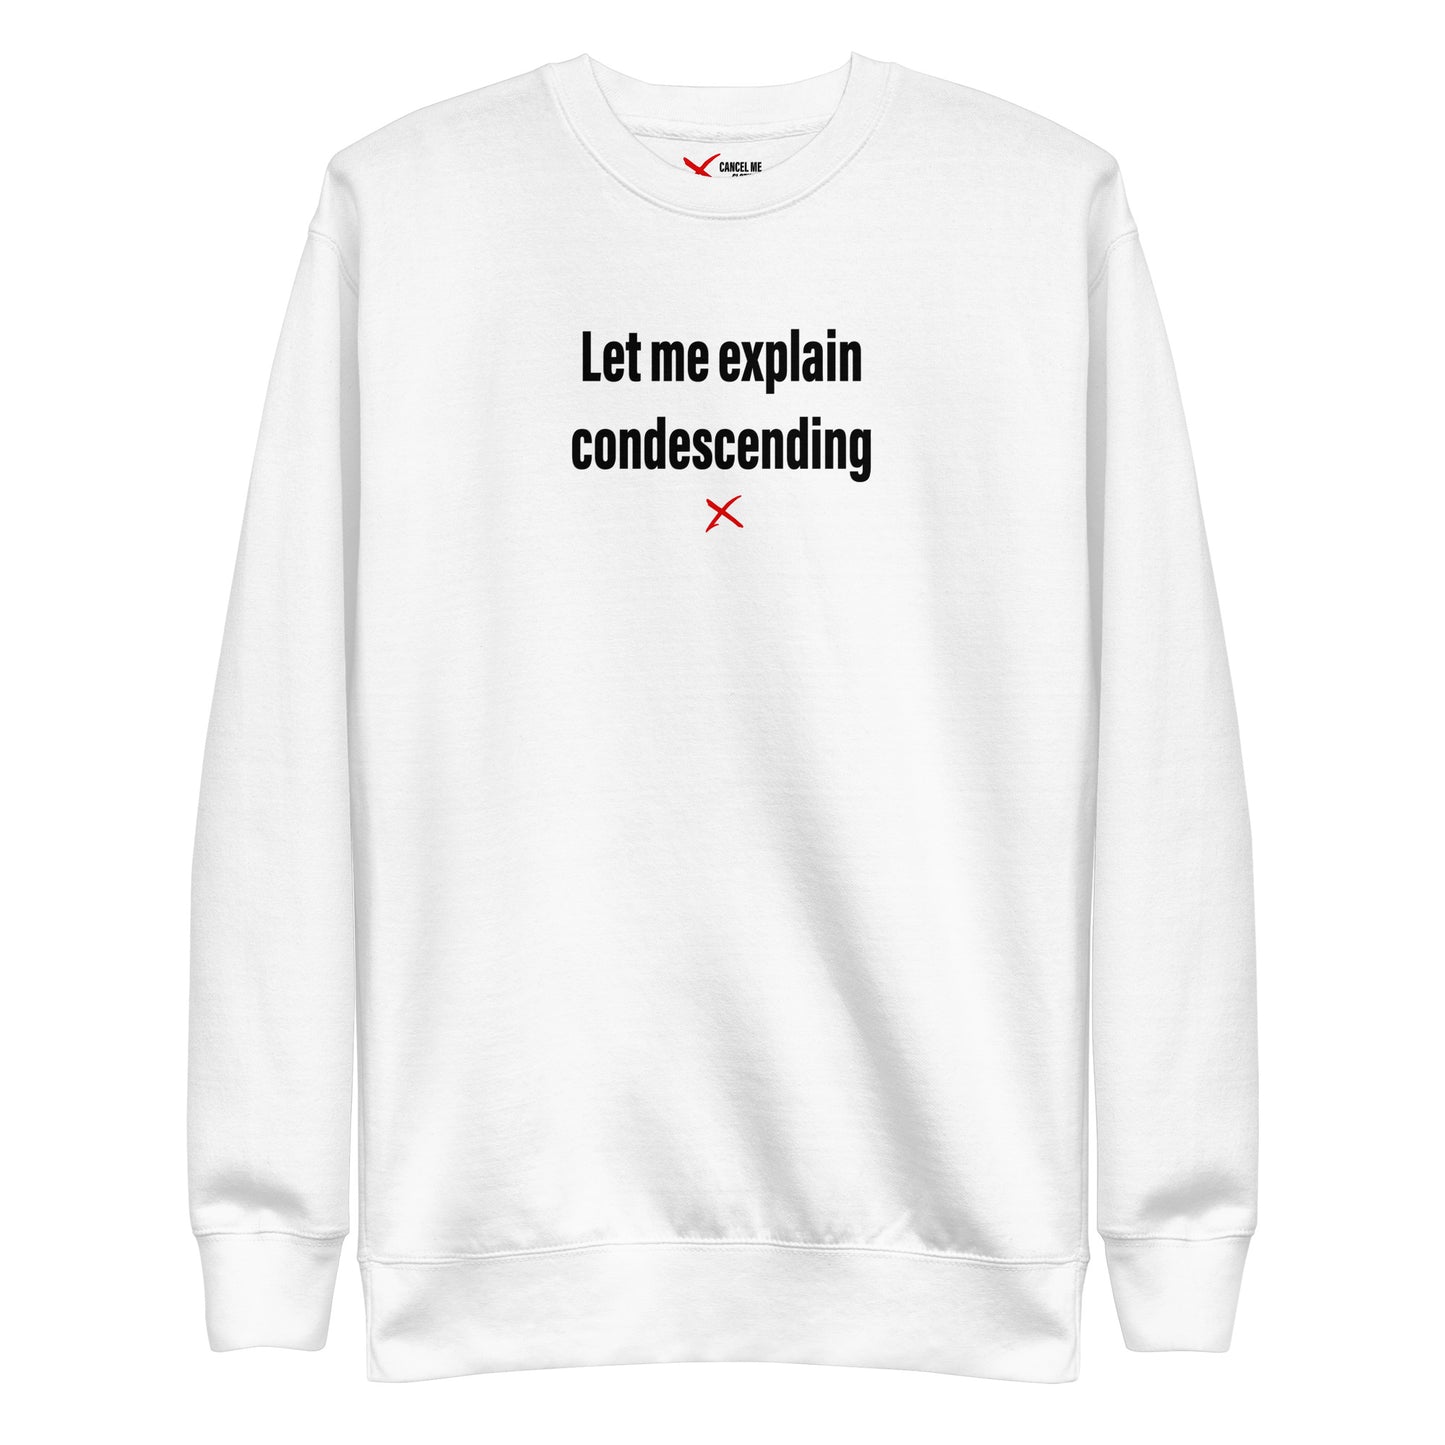 Let me explain condescending - Sweatshirt